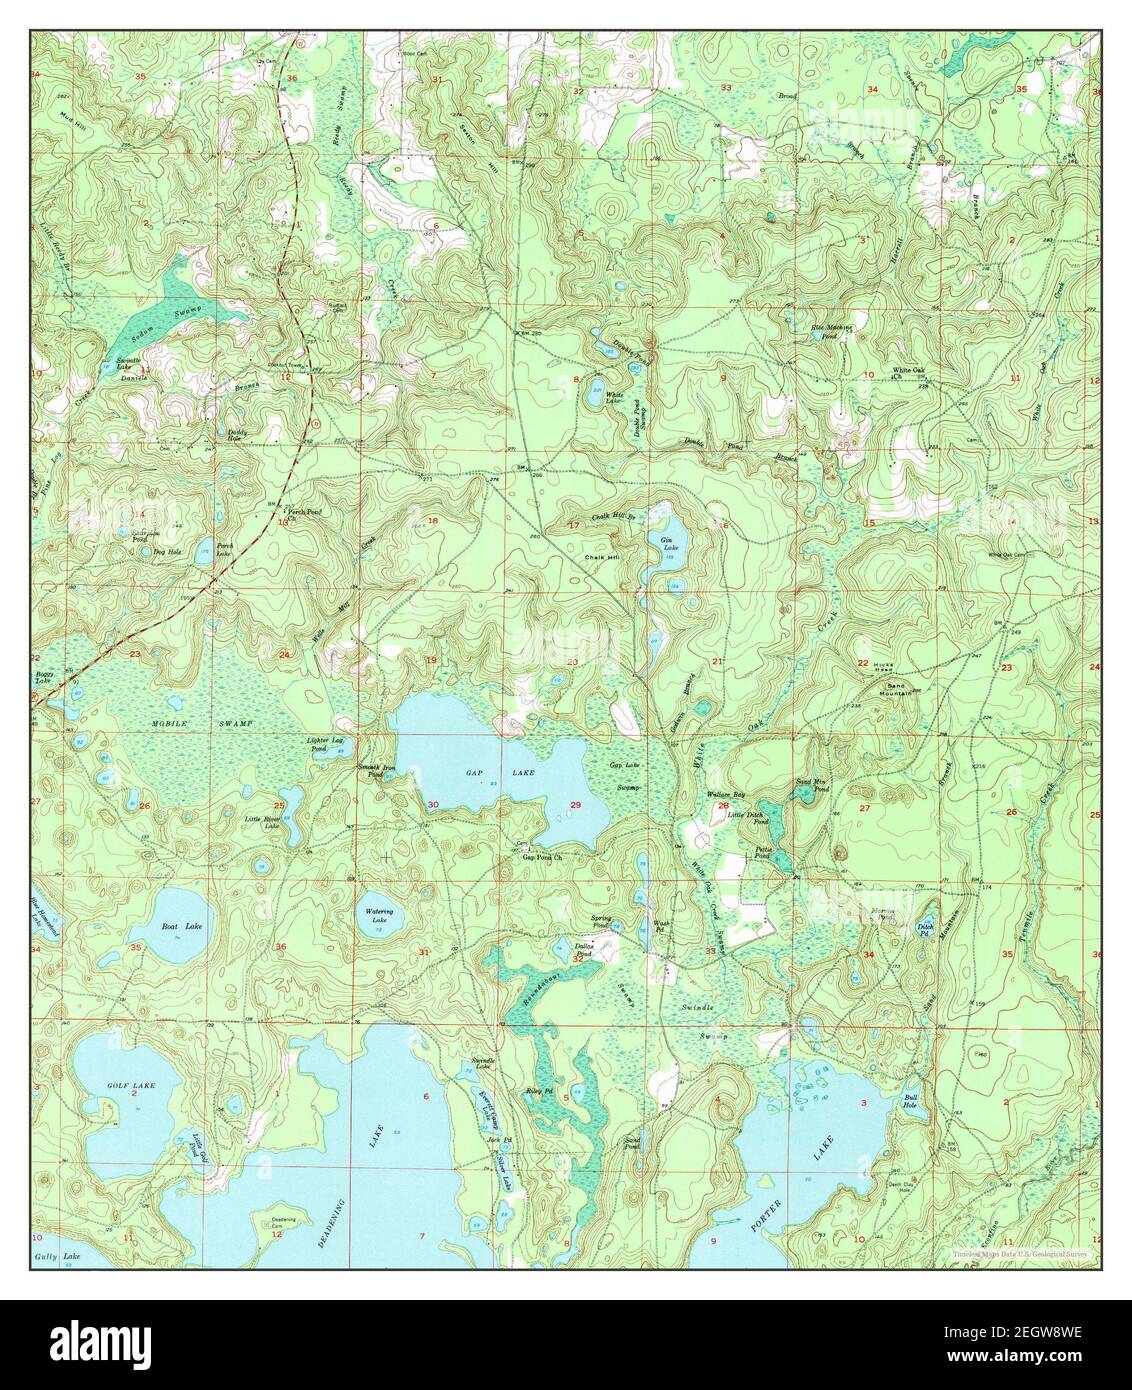 Gap Lake, Florida, map 1950, 1:24000, United States of America by Timeless Maps, data U.S. Geological Survey Stock Photo